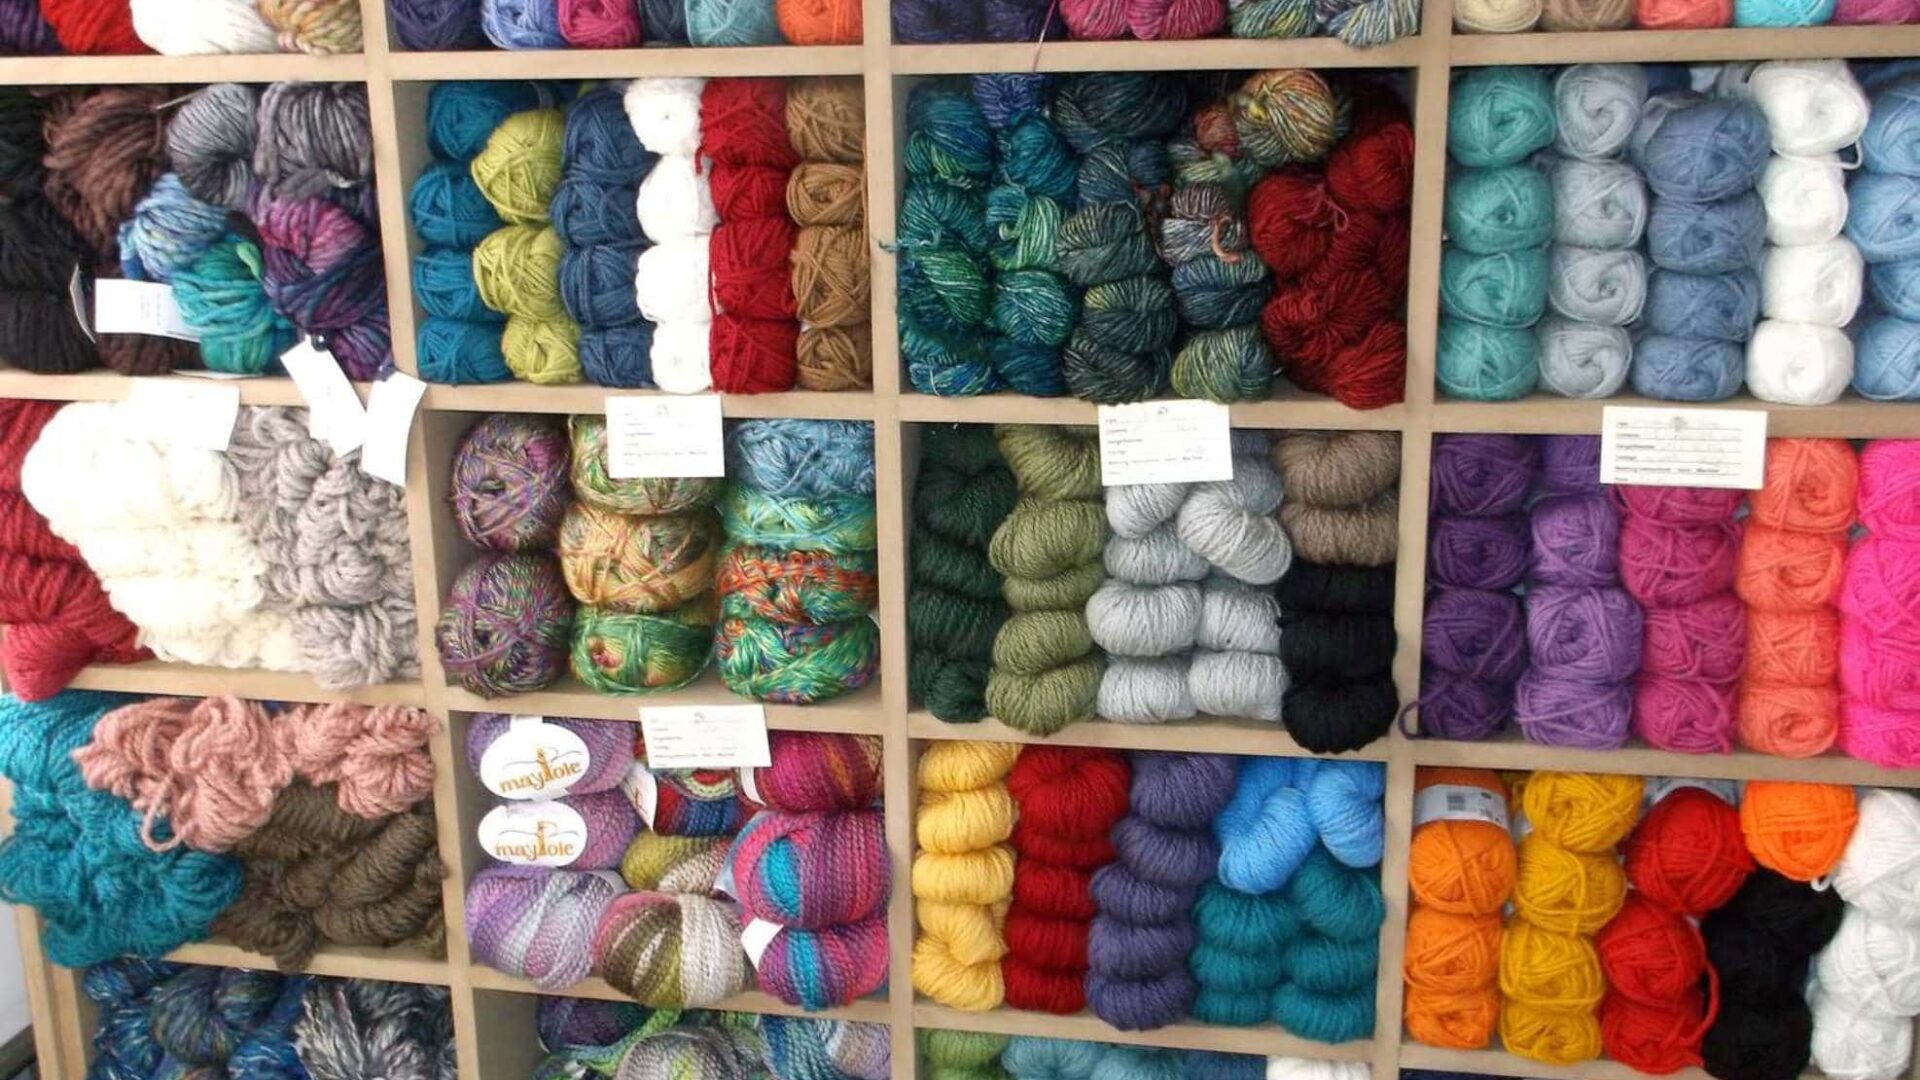 Yarn shops in Vermont